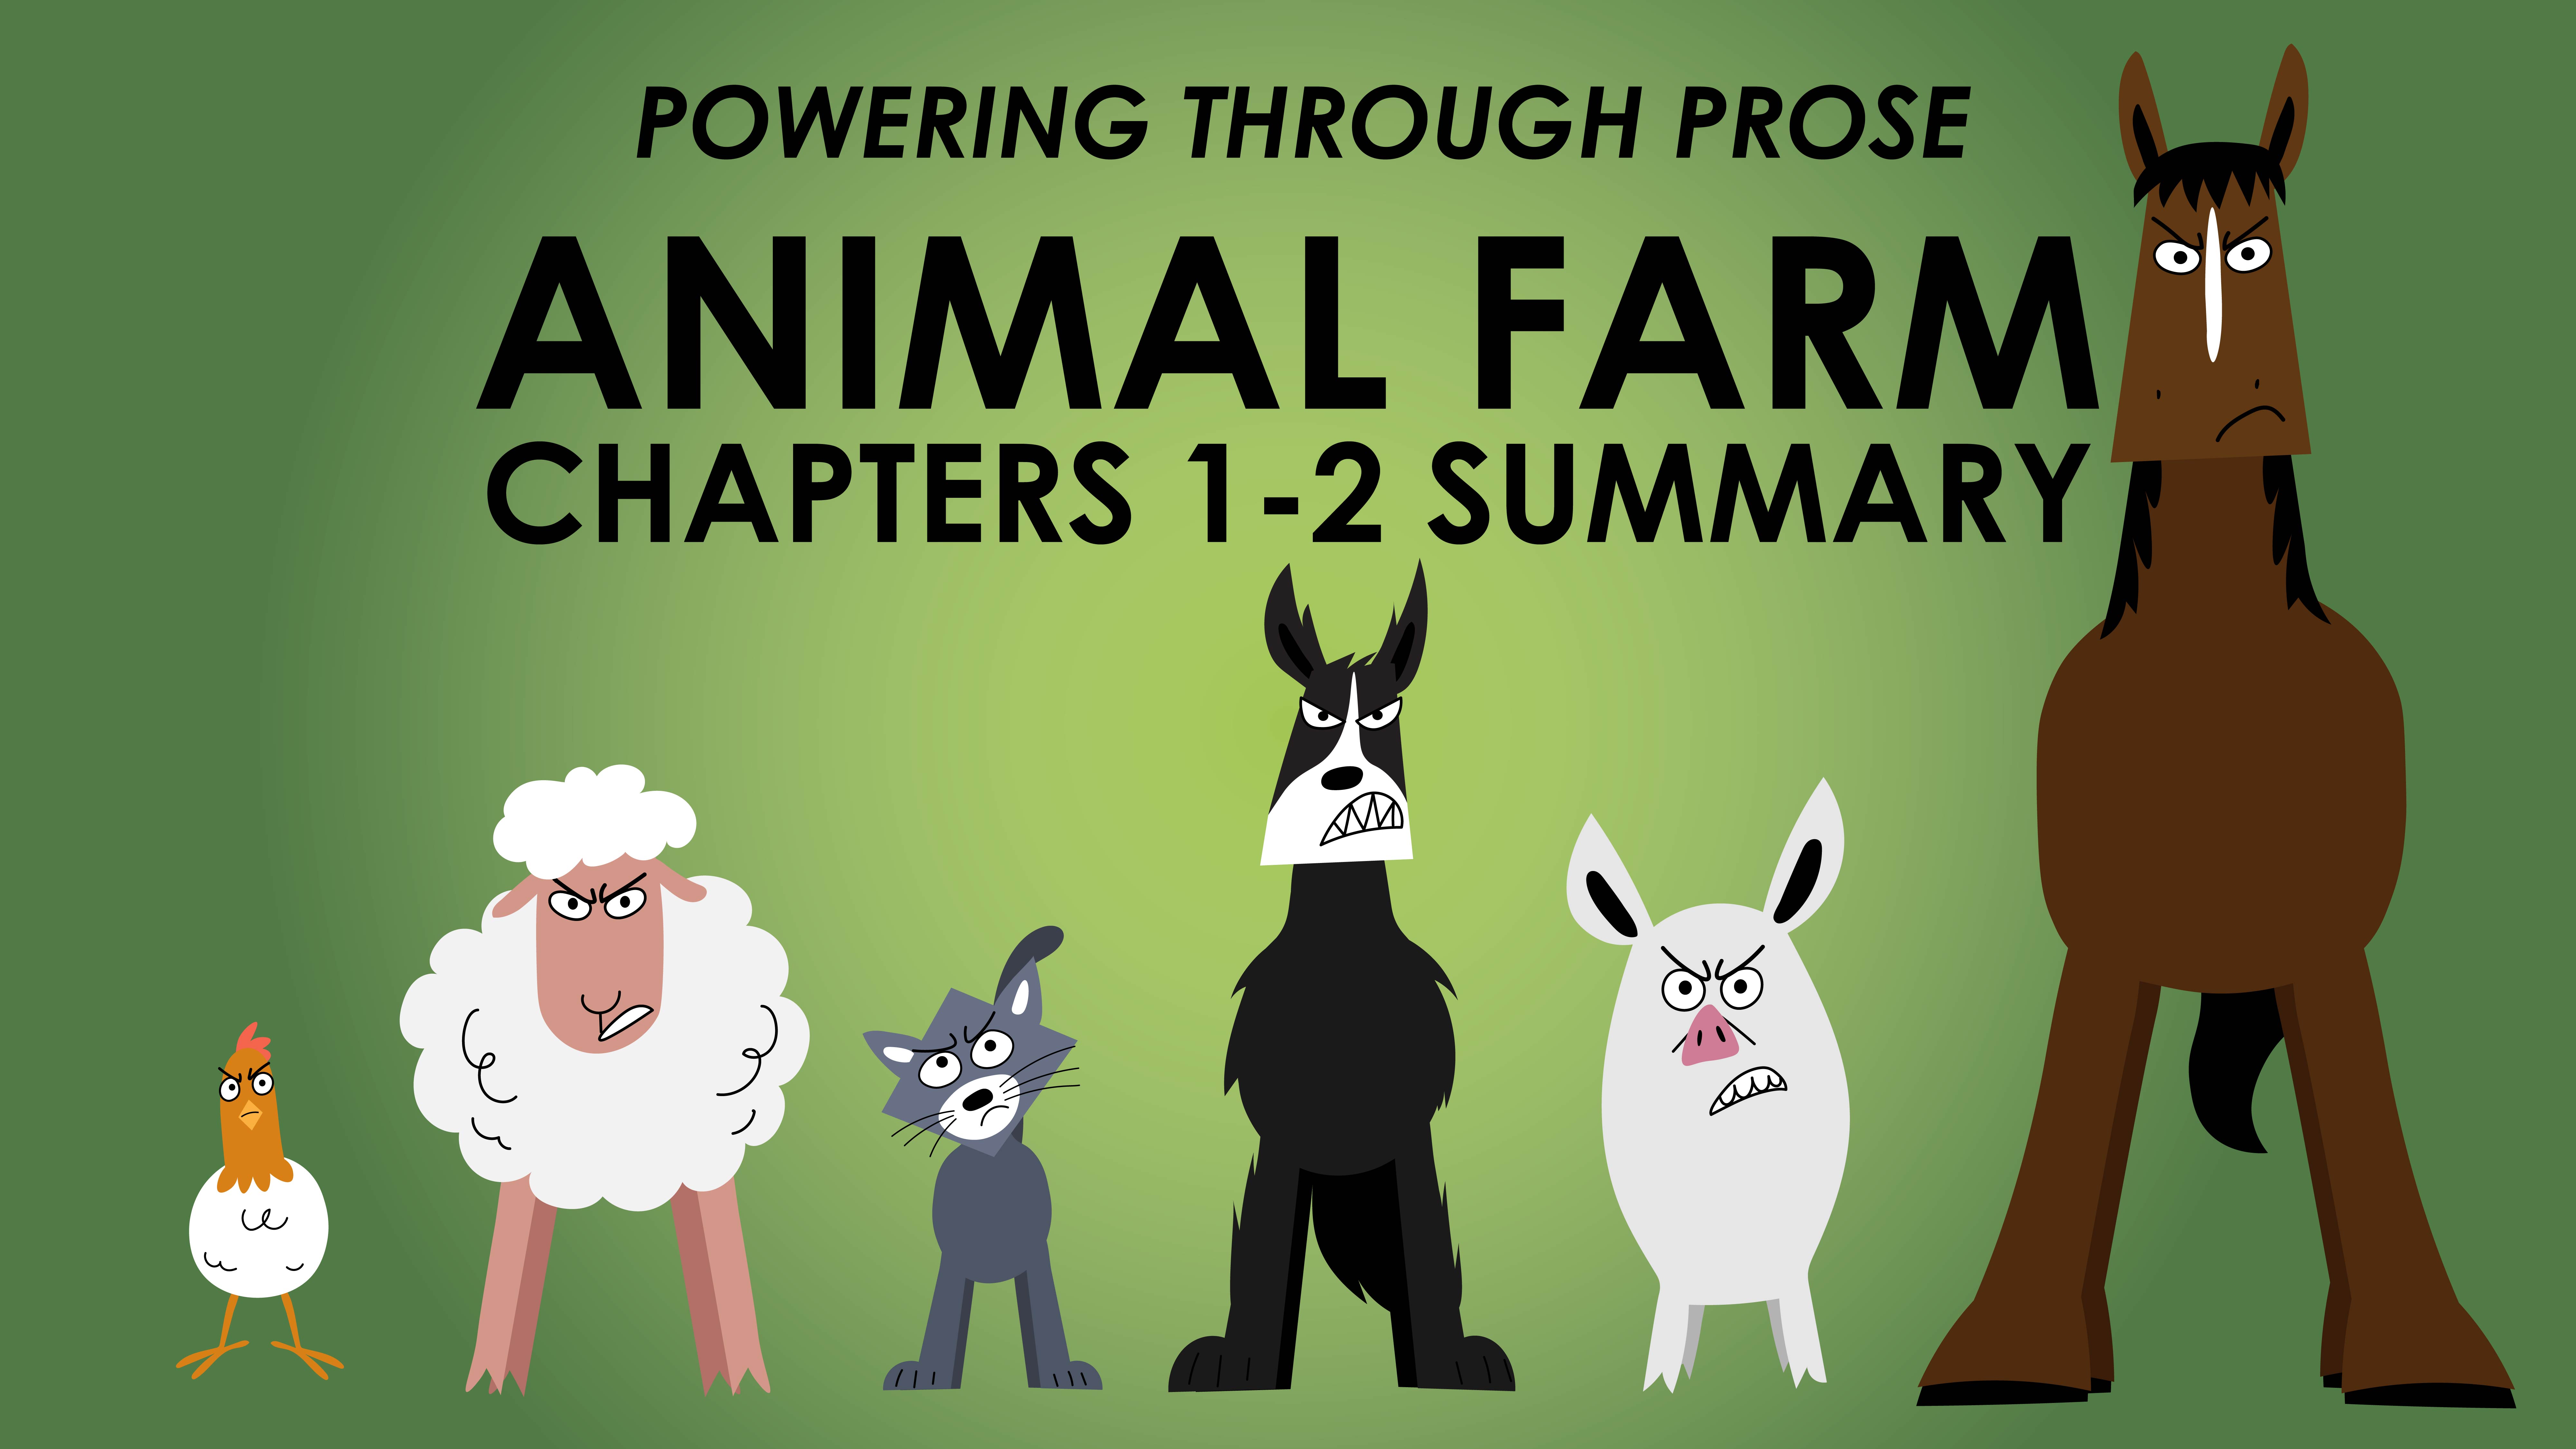 Animal Farm - George Orwell - Chapters 1-2 Summary - Powering Through Prose Series